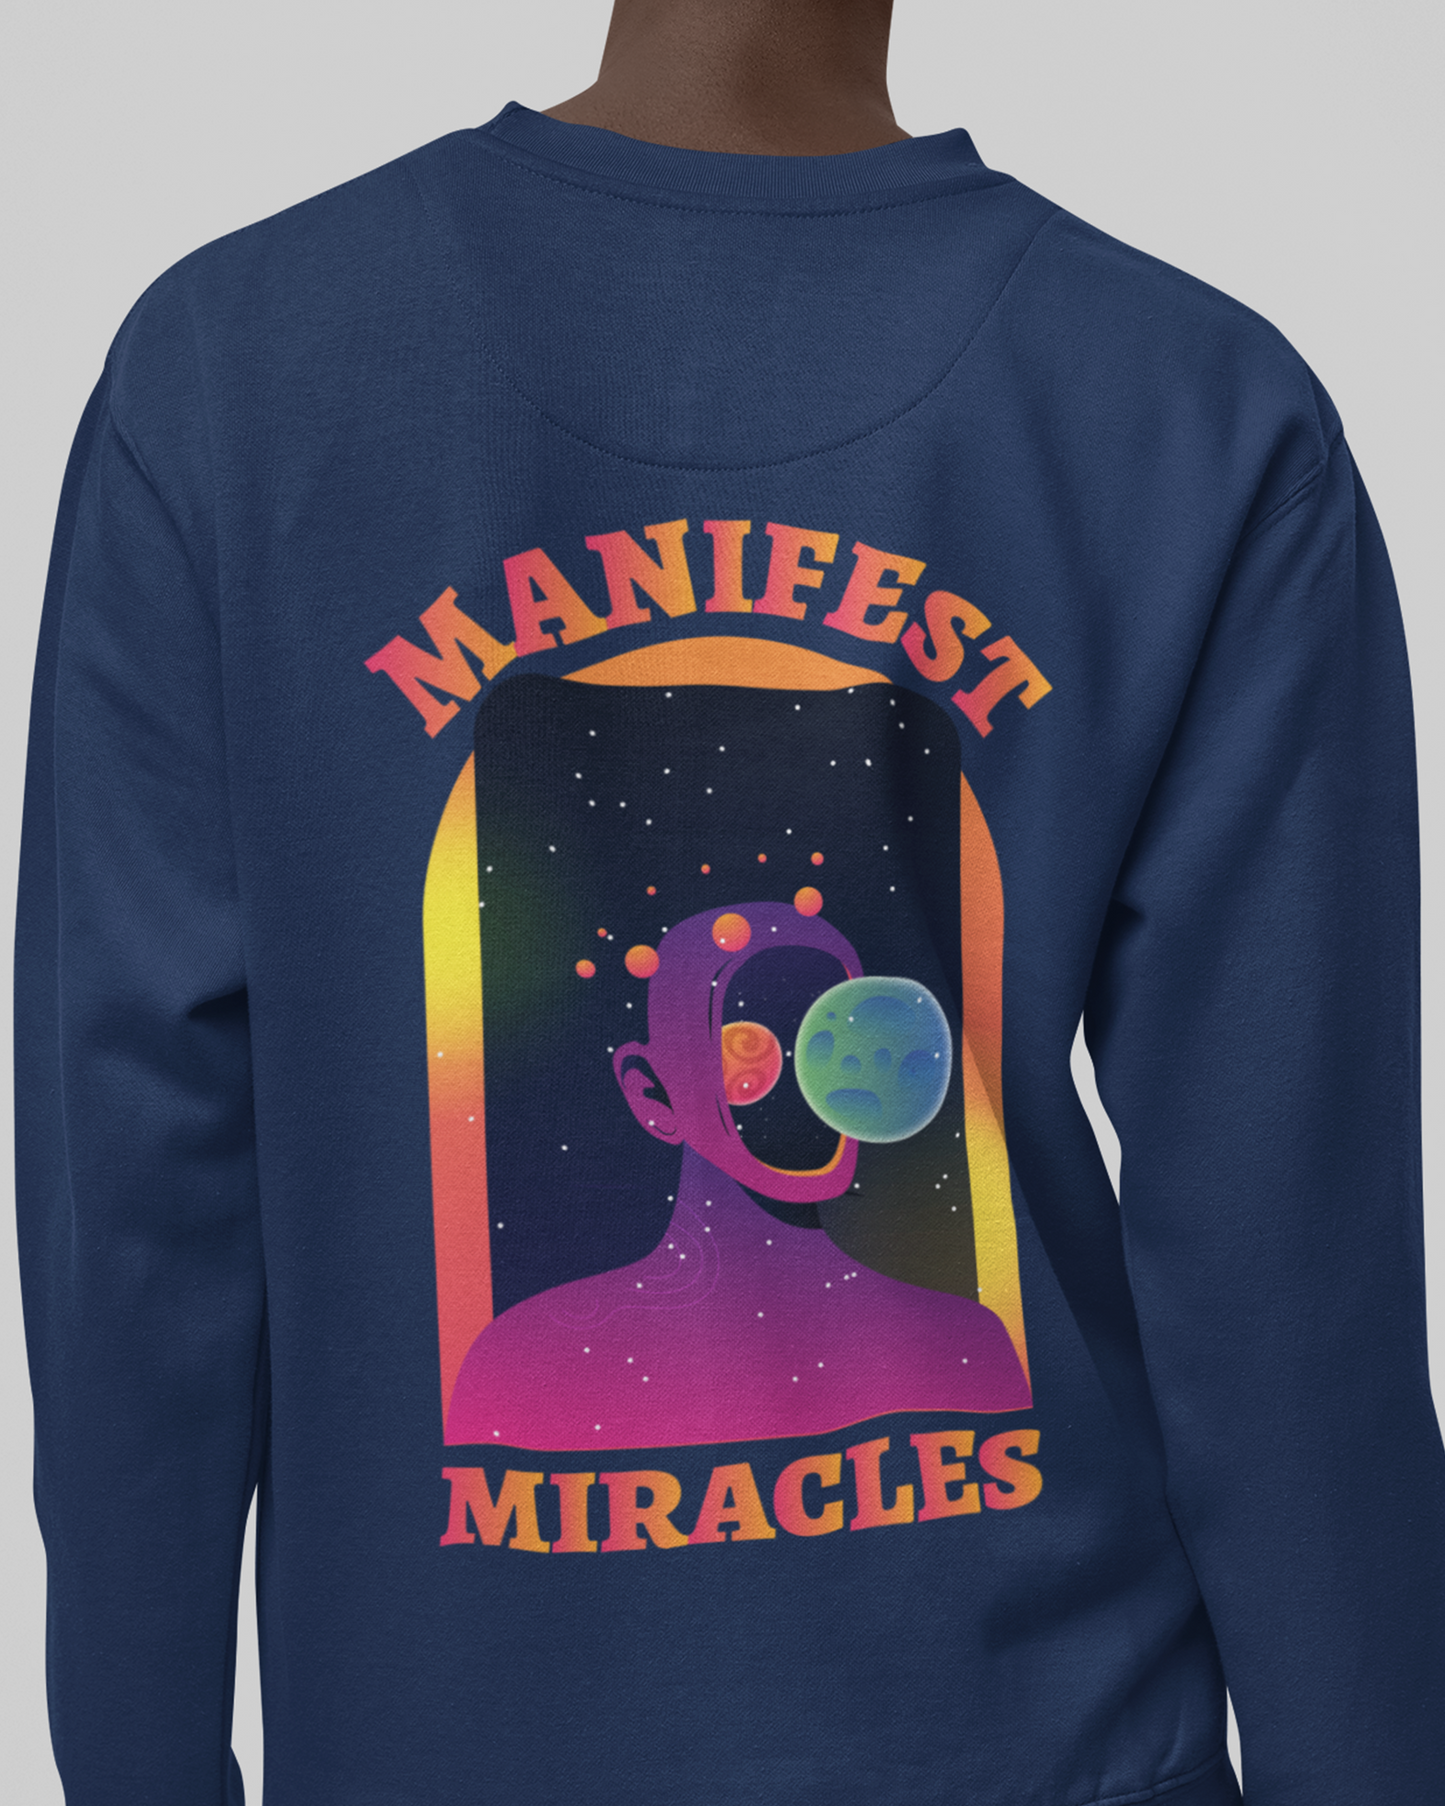 Manifest Miracles Sweatshirt